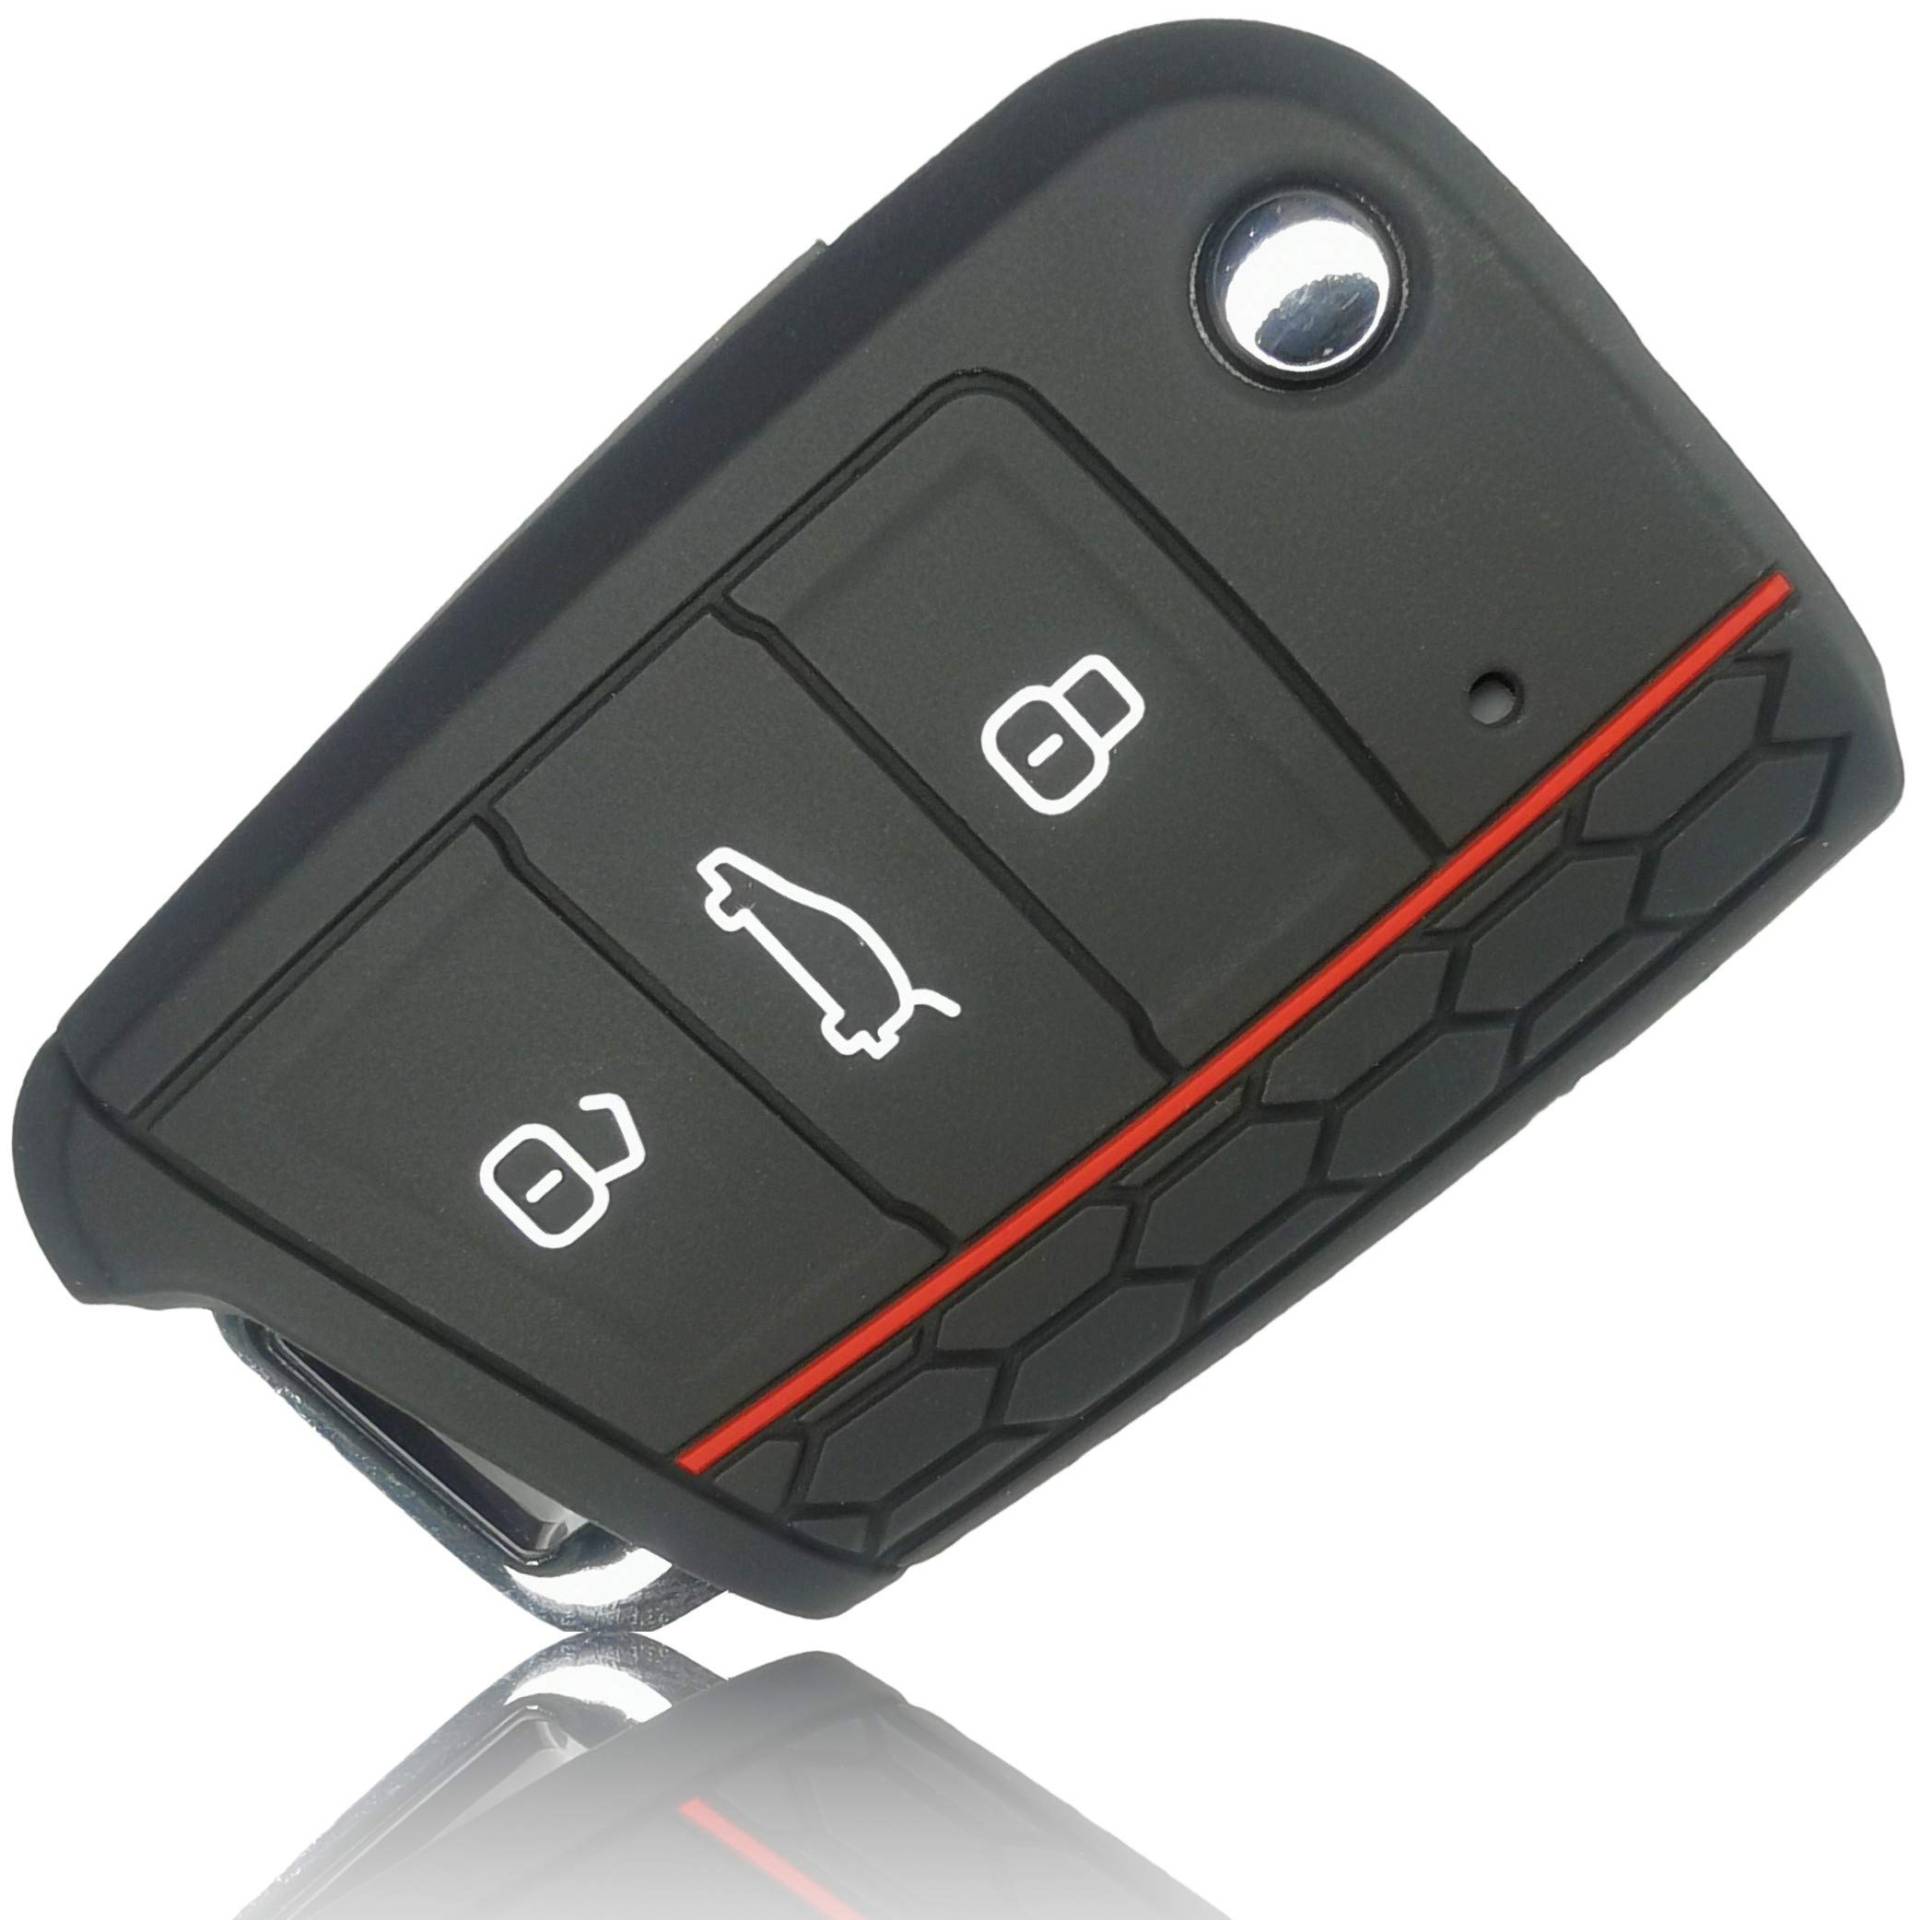 FOAMO Autoschlüssel Hülle Kompatibel mit VW Golf 7, SEAT, SKODA Autoschlüssel Silikon-Hülle Schlüssel-Hülle Schutz-Hülle für Autoschlüssel Schwarz Rot von FOAMO